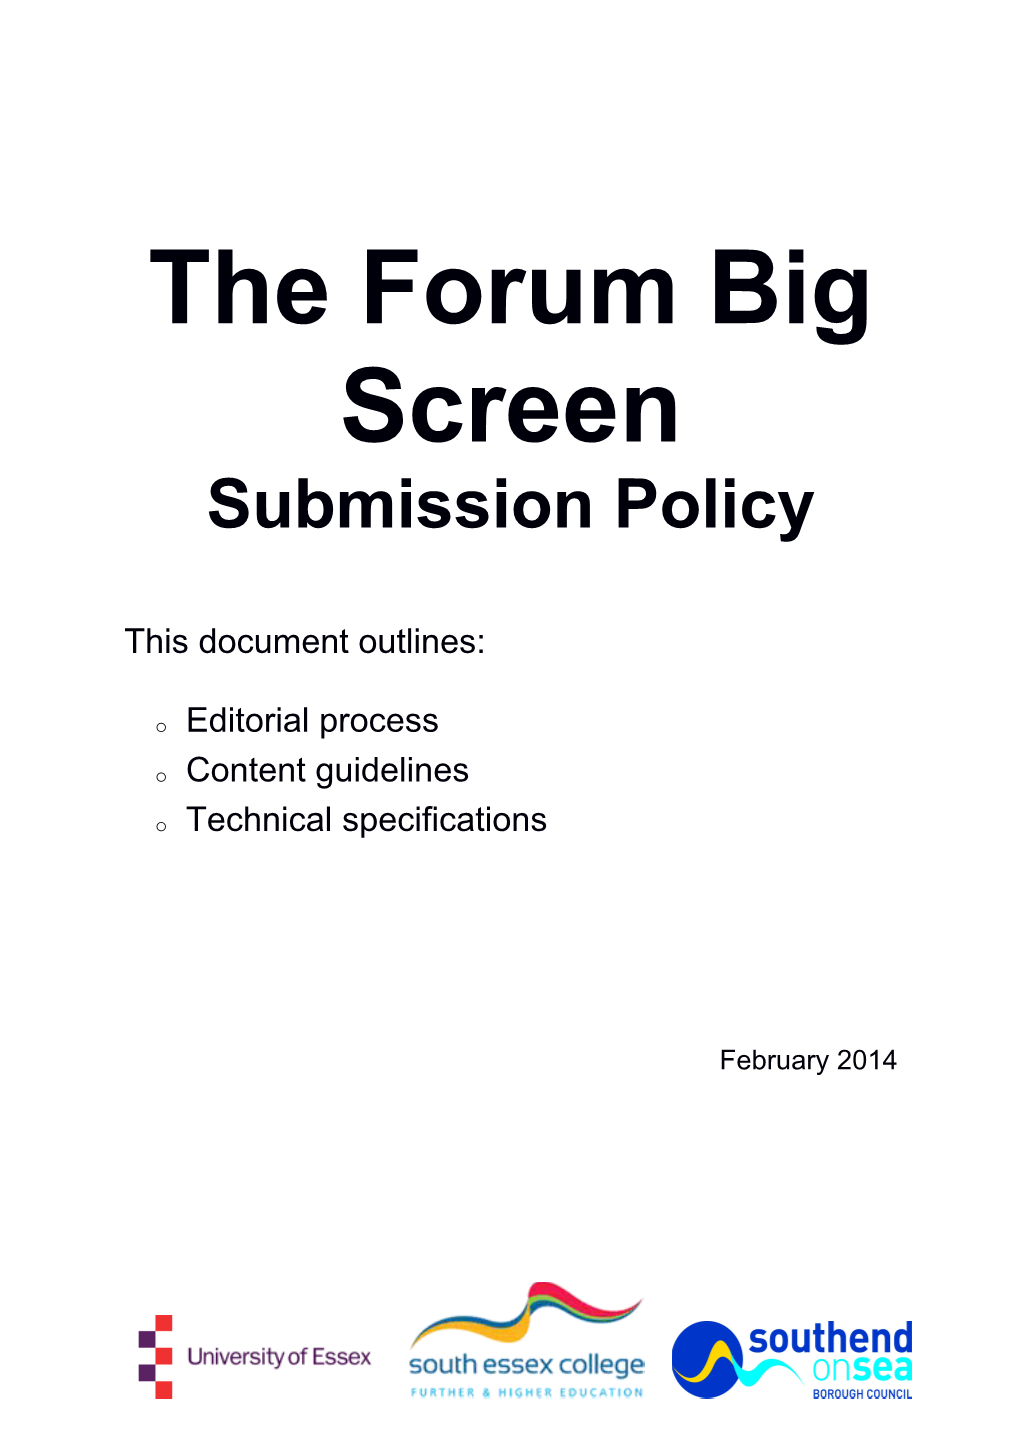 The Forum Big Screen